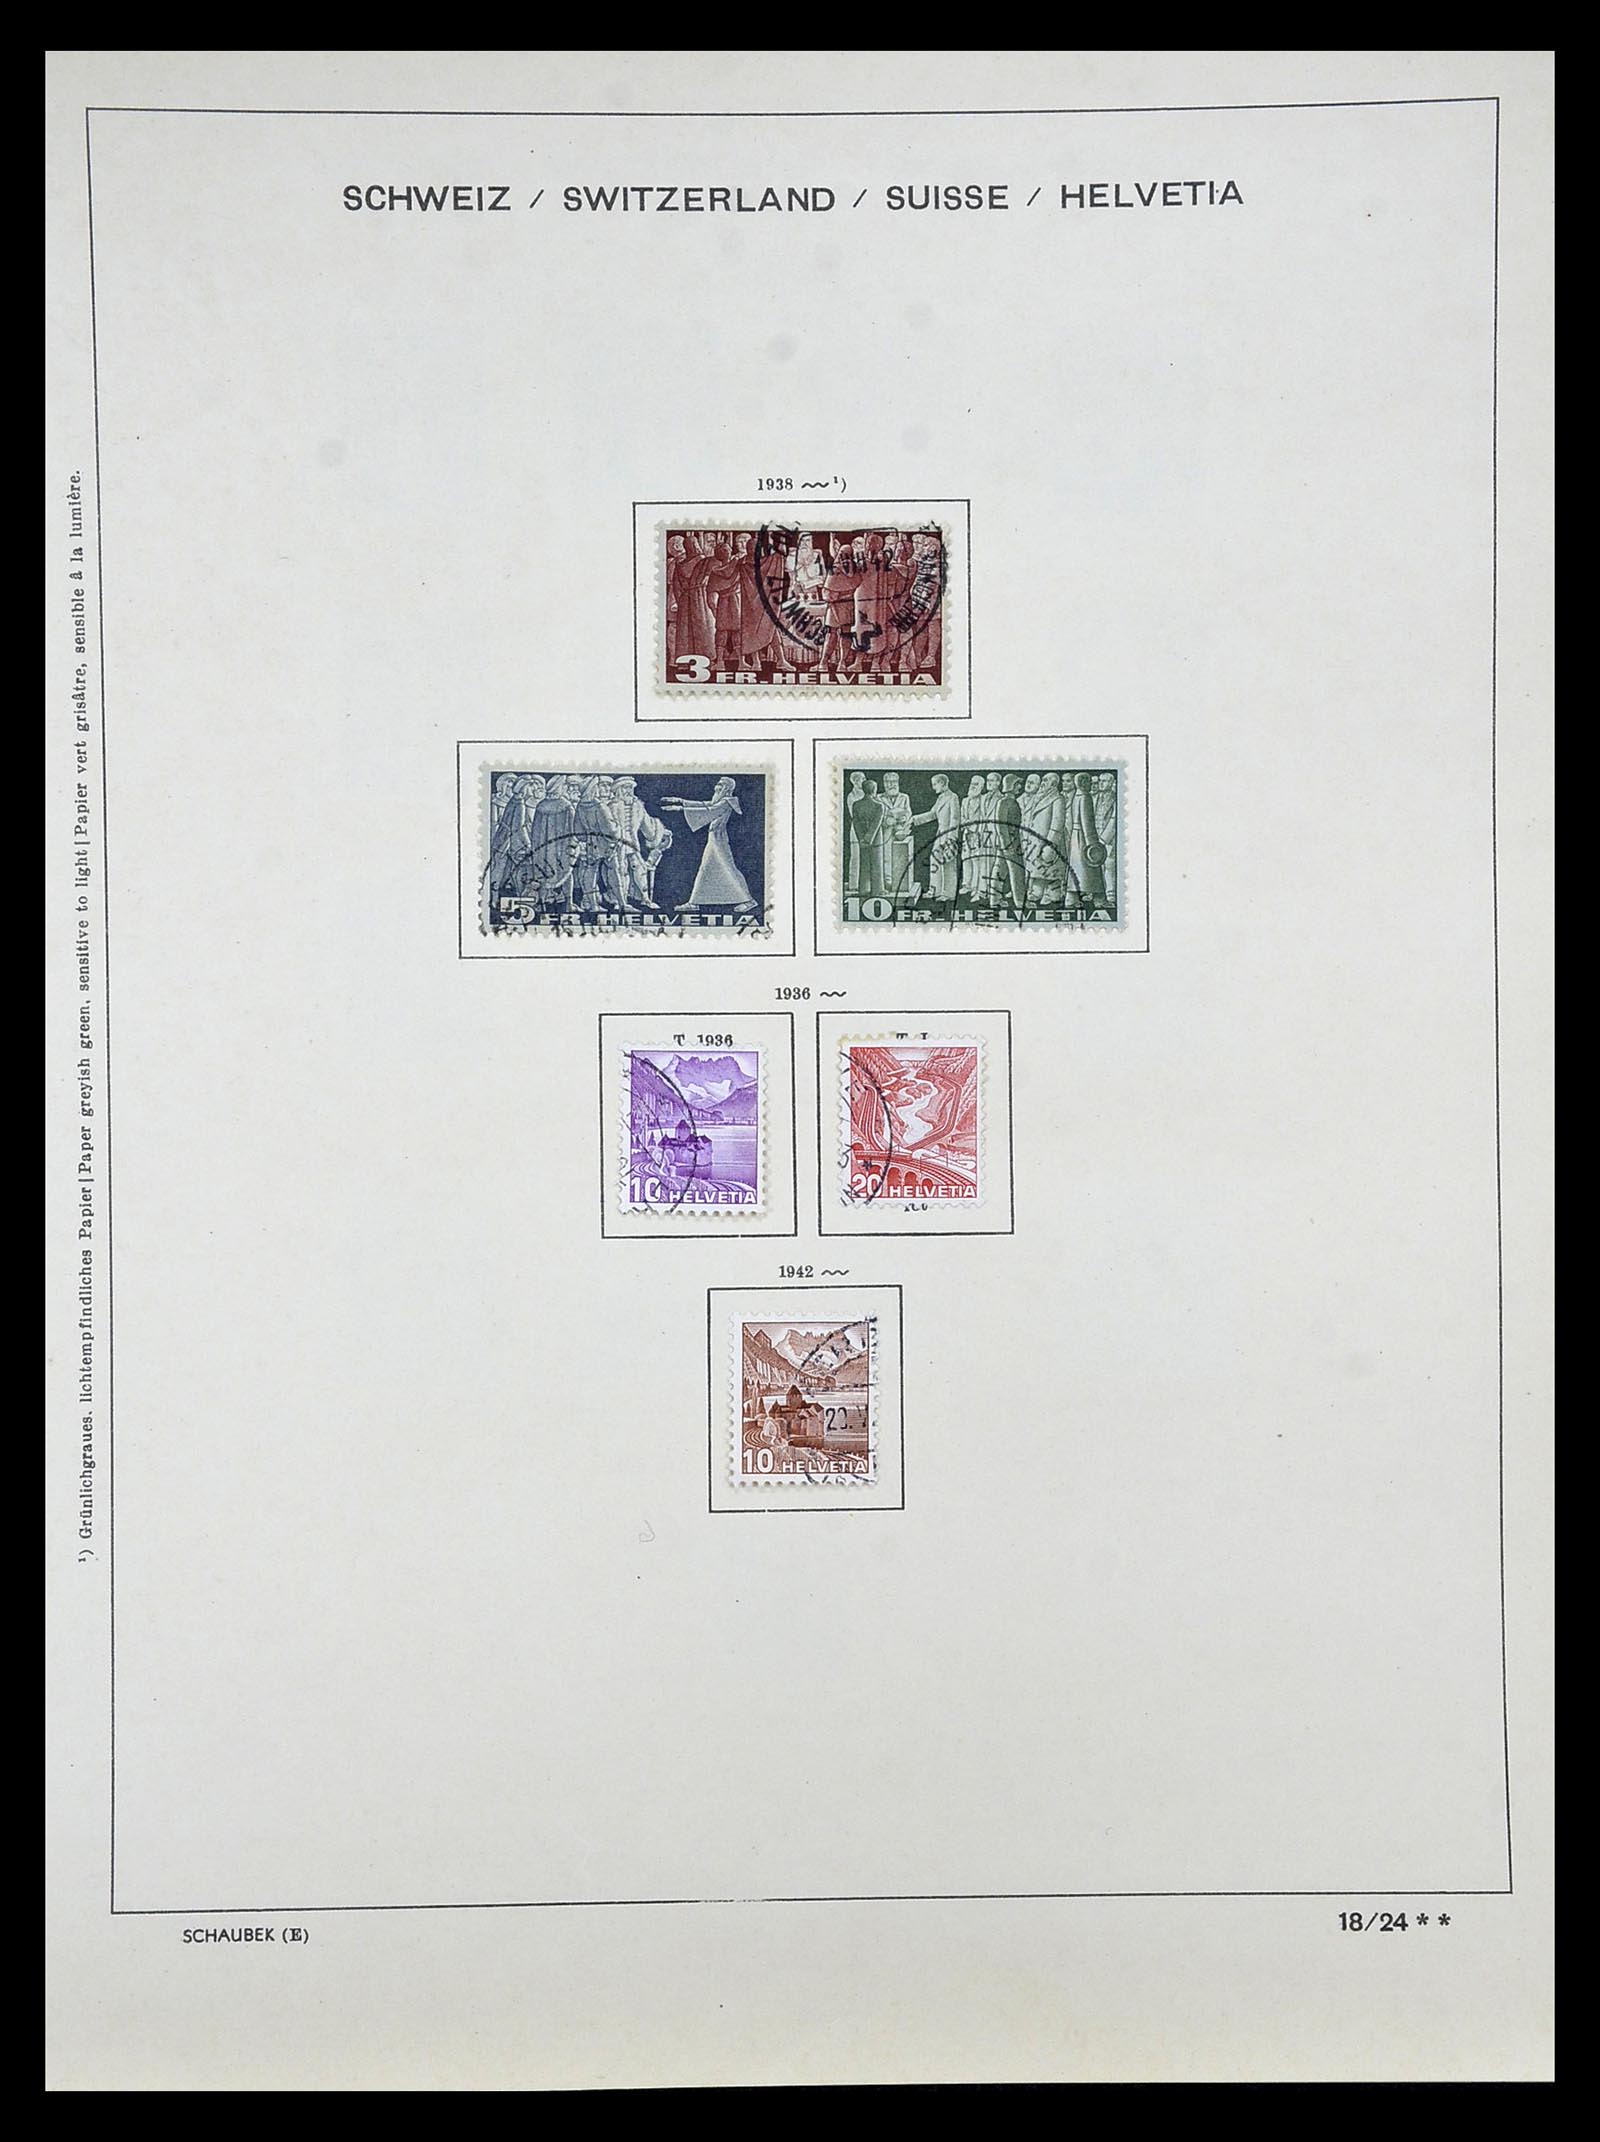 35073 020 - Stamp Collection 35073 Switzerland 1862-1992.